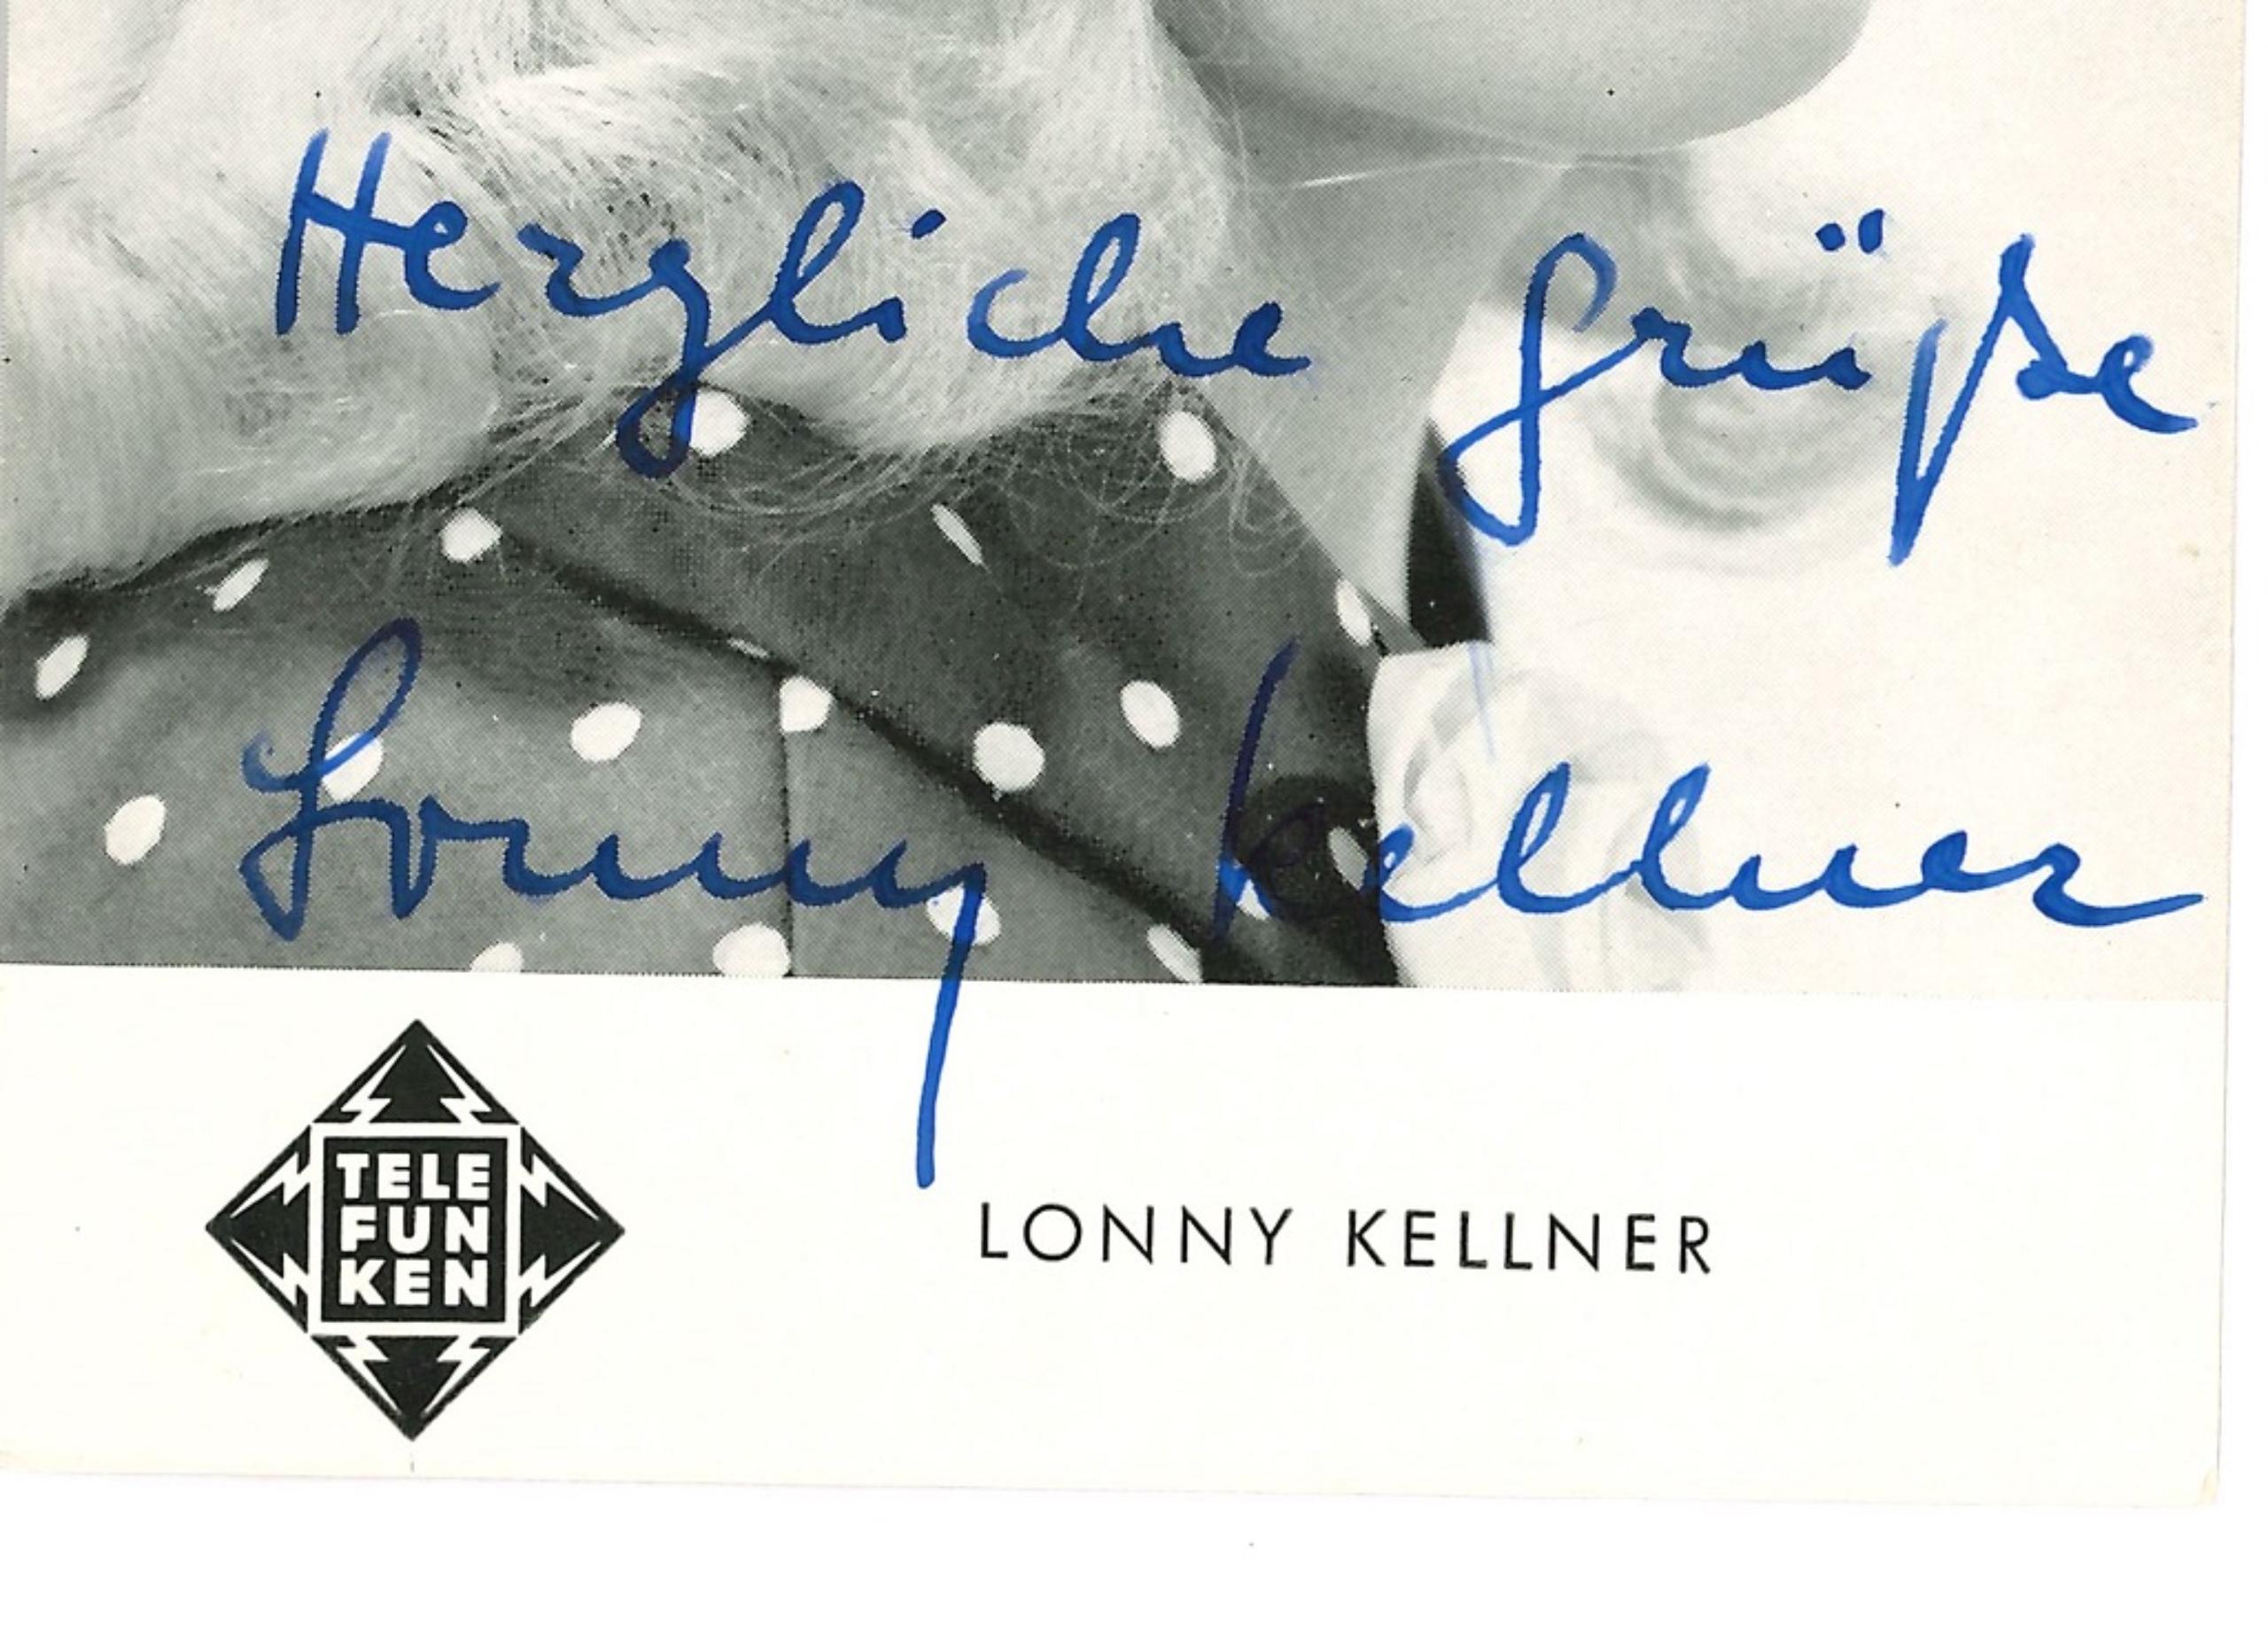 Autographed Portrait of Lonny Kellner - Vintage b/w Postcard - 1950s - Photograph by Unknown